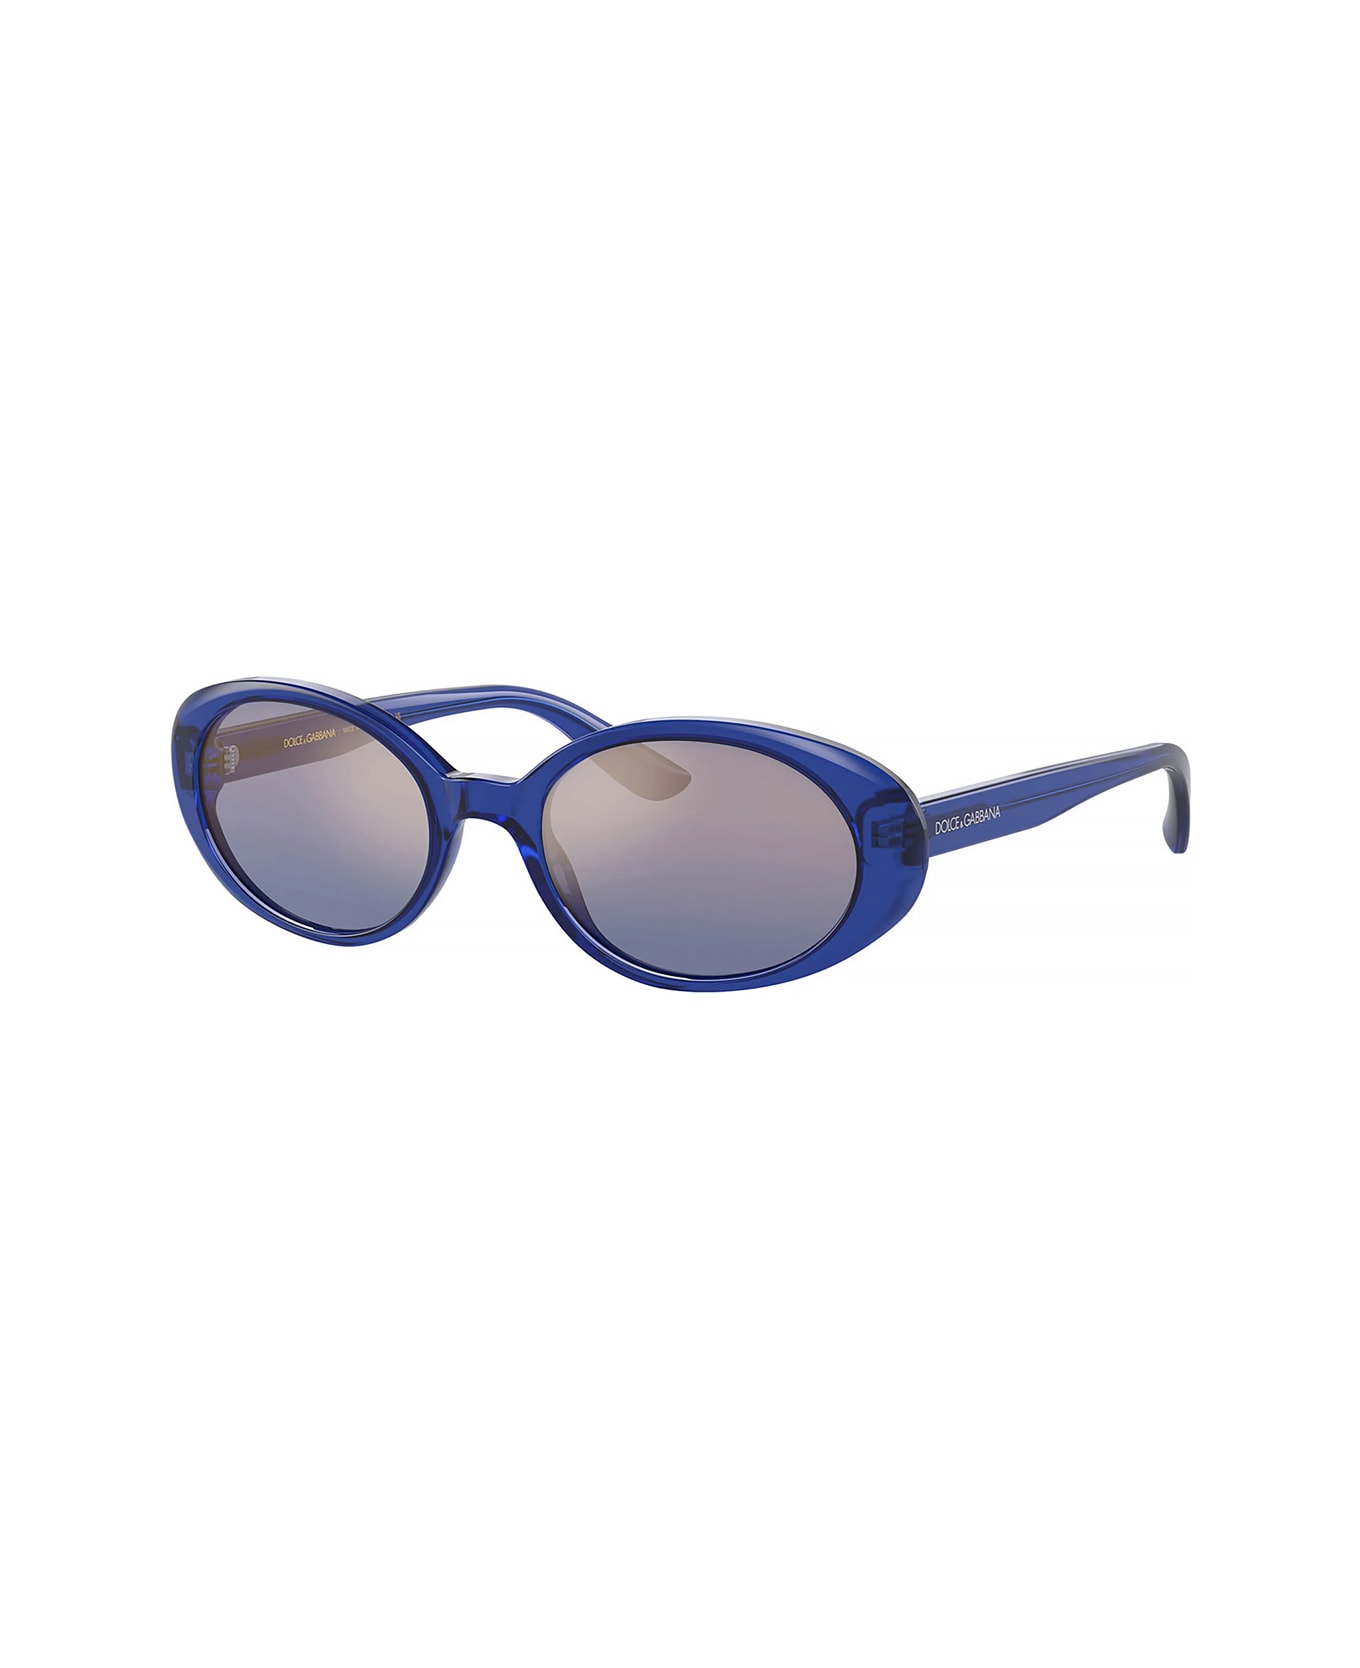 Dolce & Gabbana Eyewear Dg4443 339833 Sunglasses - Blu サングラス